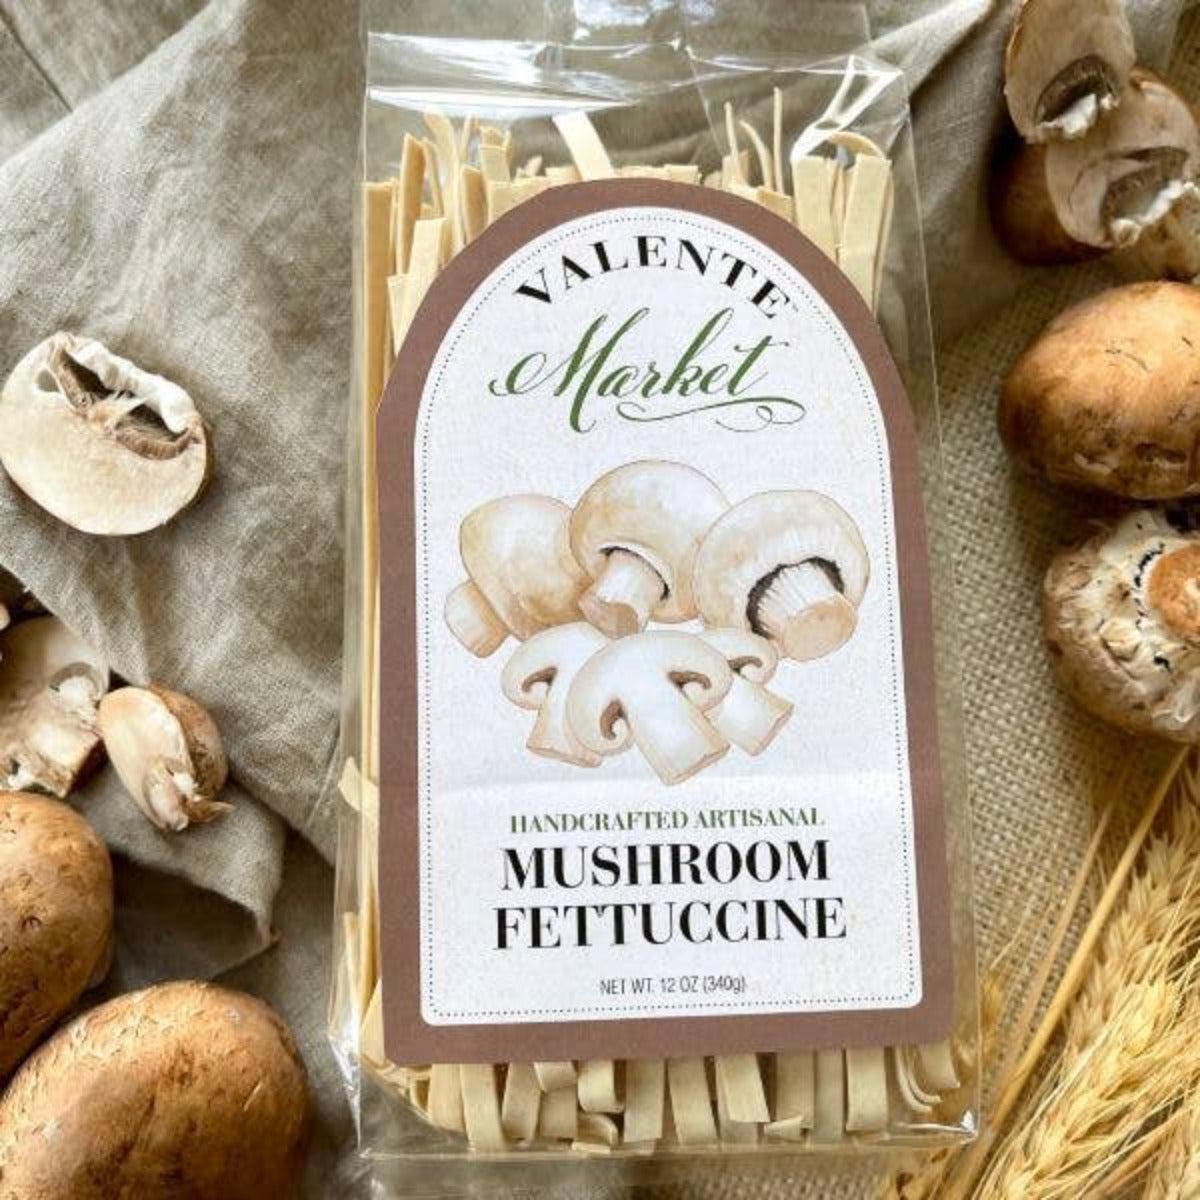 Mushroom Fettuccine, valente pasta, olive and basket